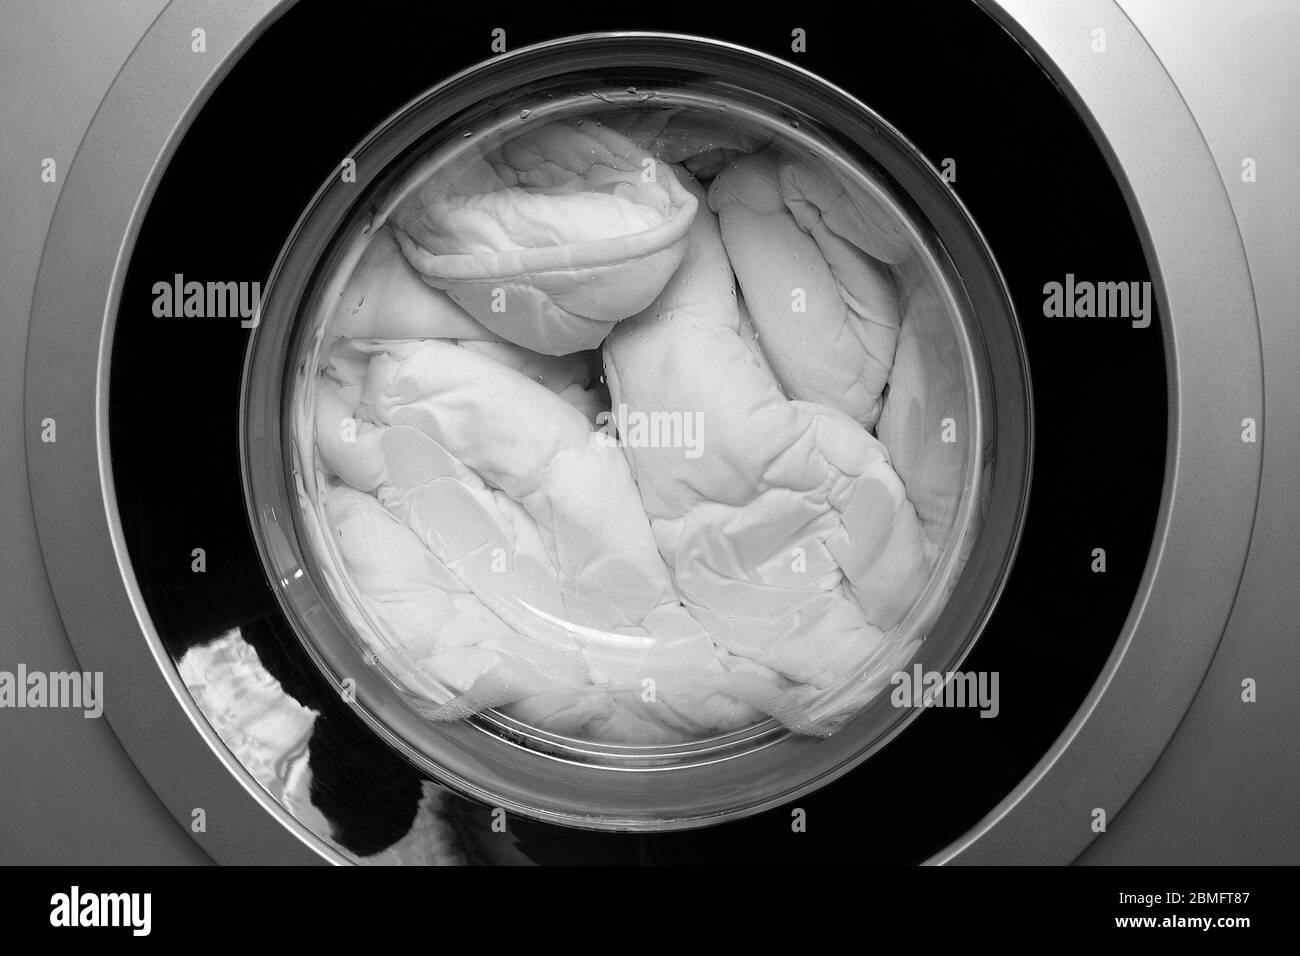 Washing machine door with rotating garments inside Stock Photo